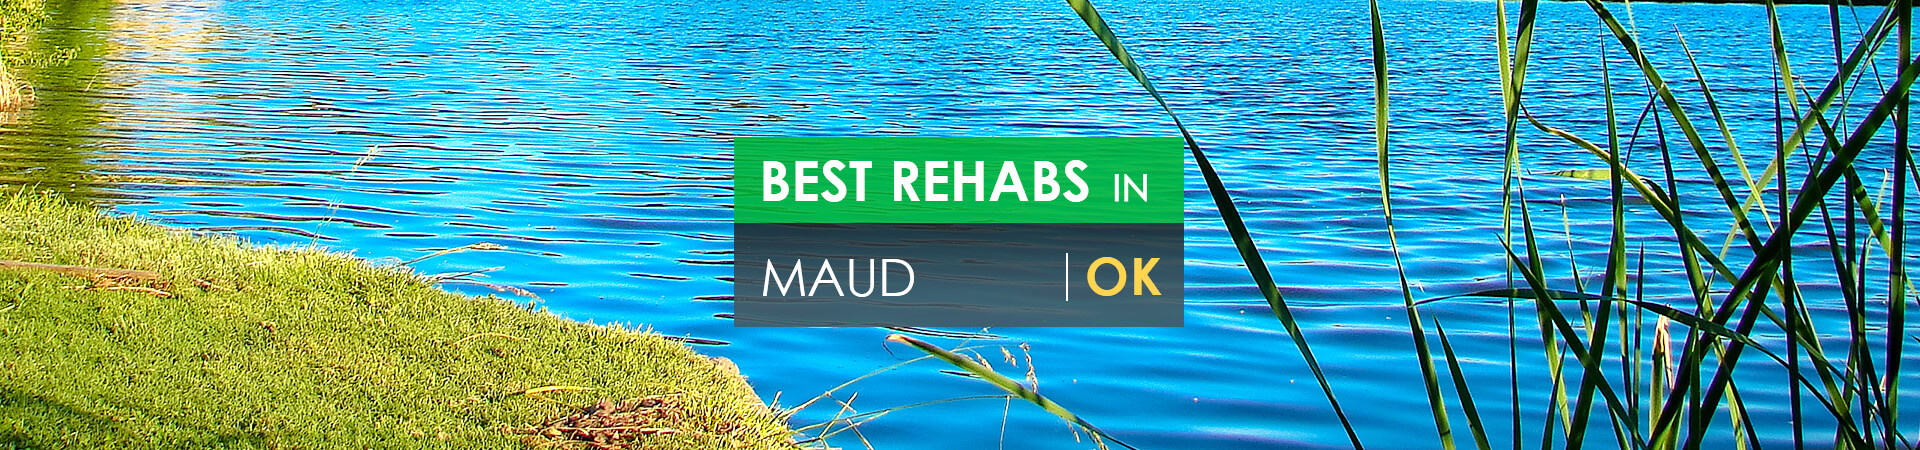 Best rehabs in Maud, OK